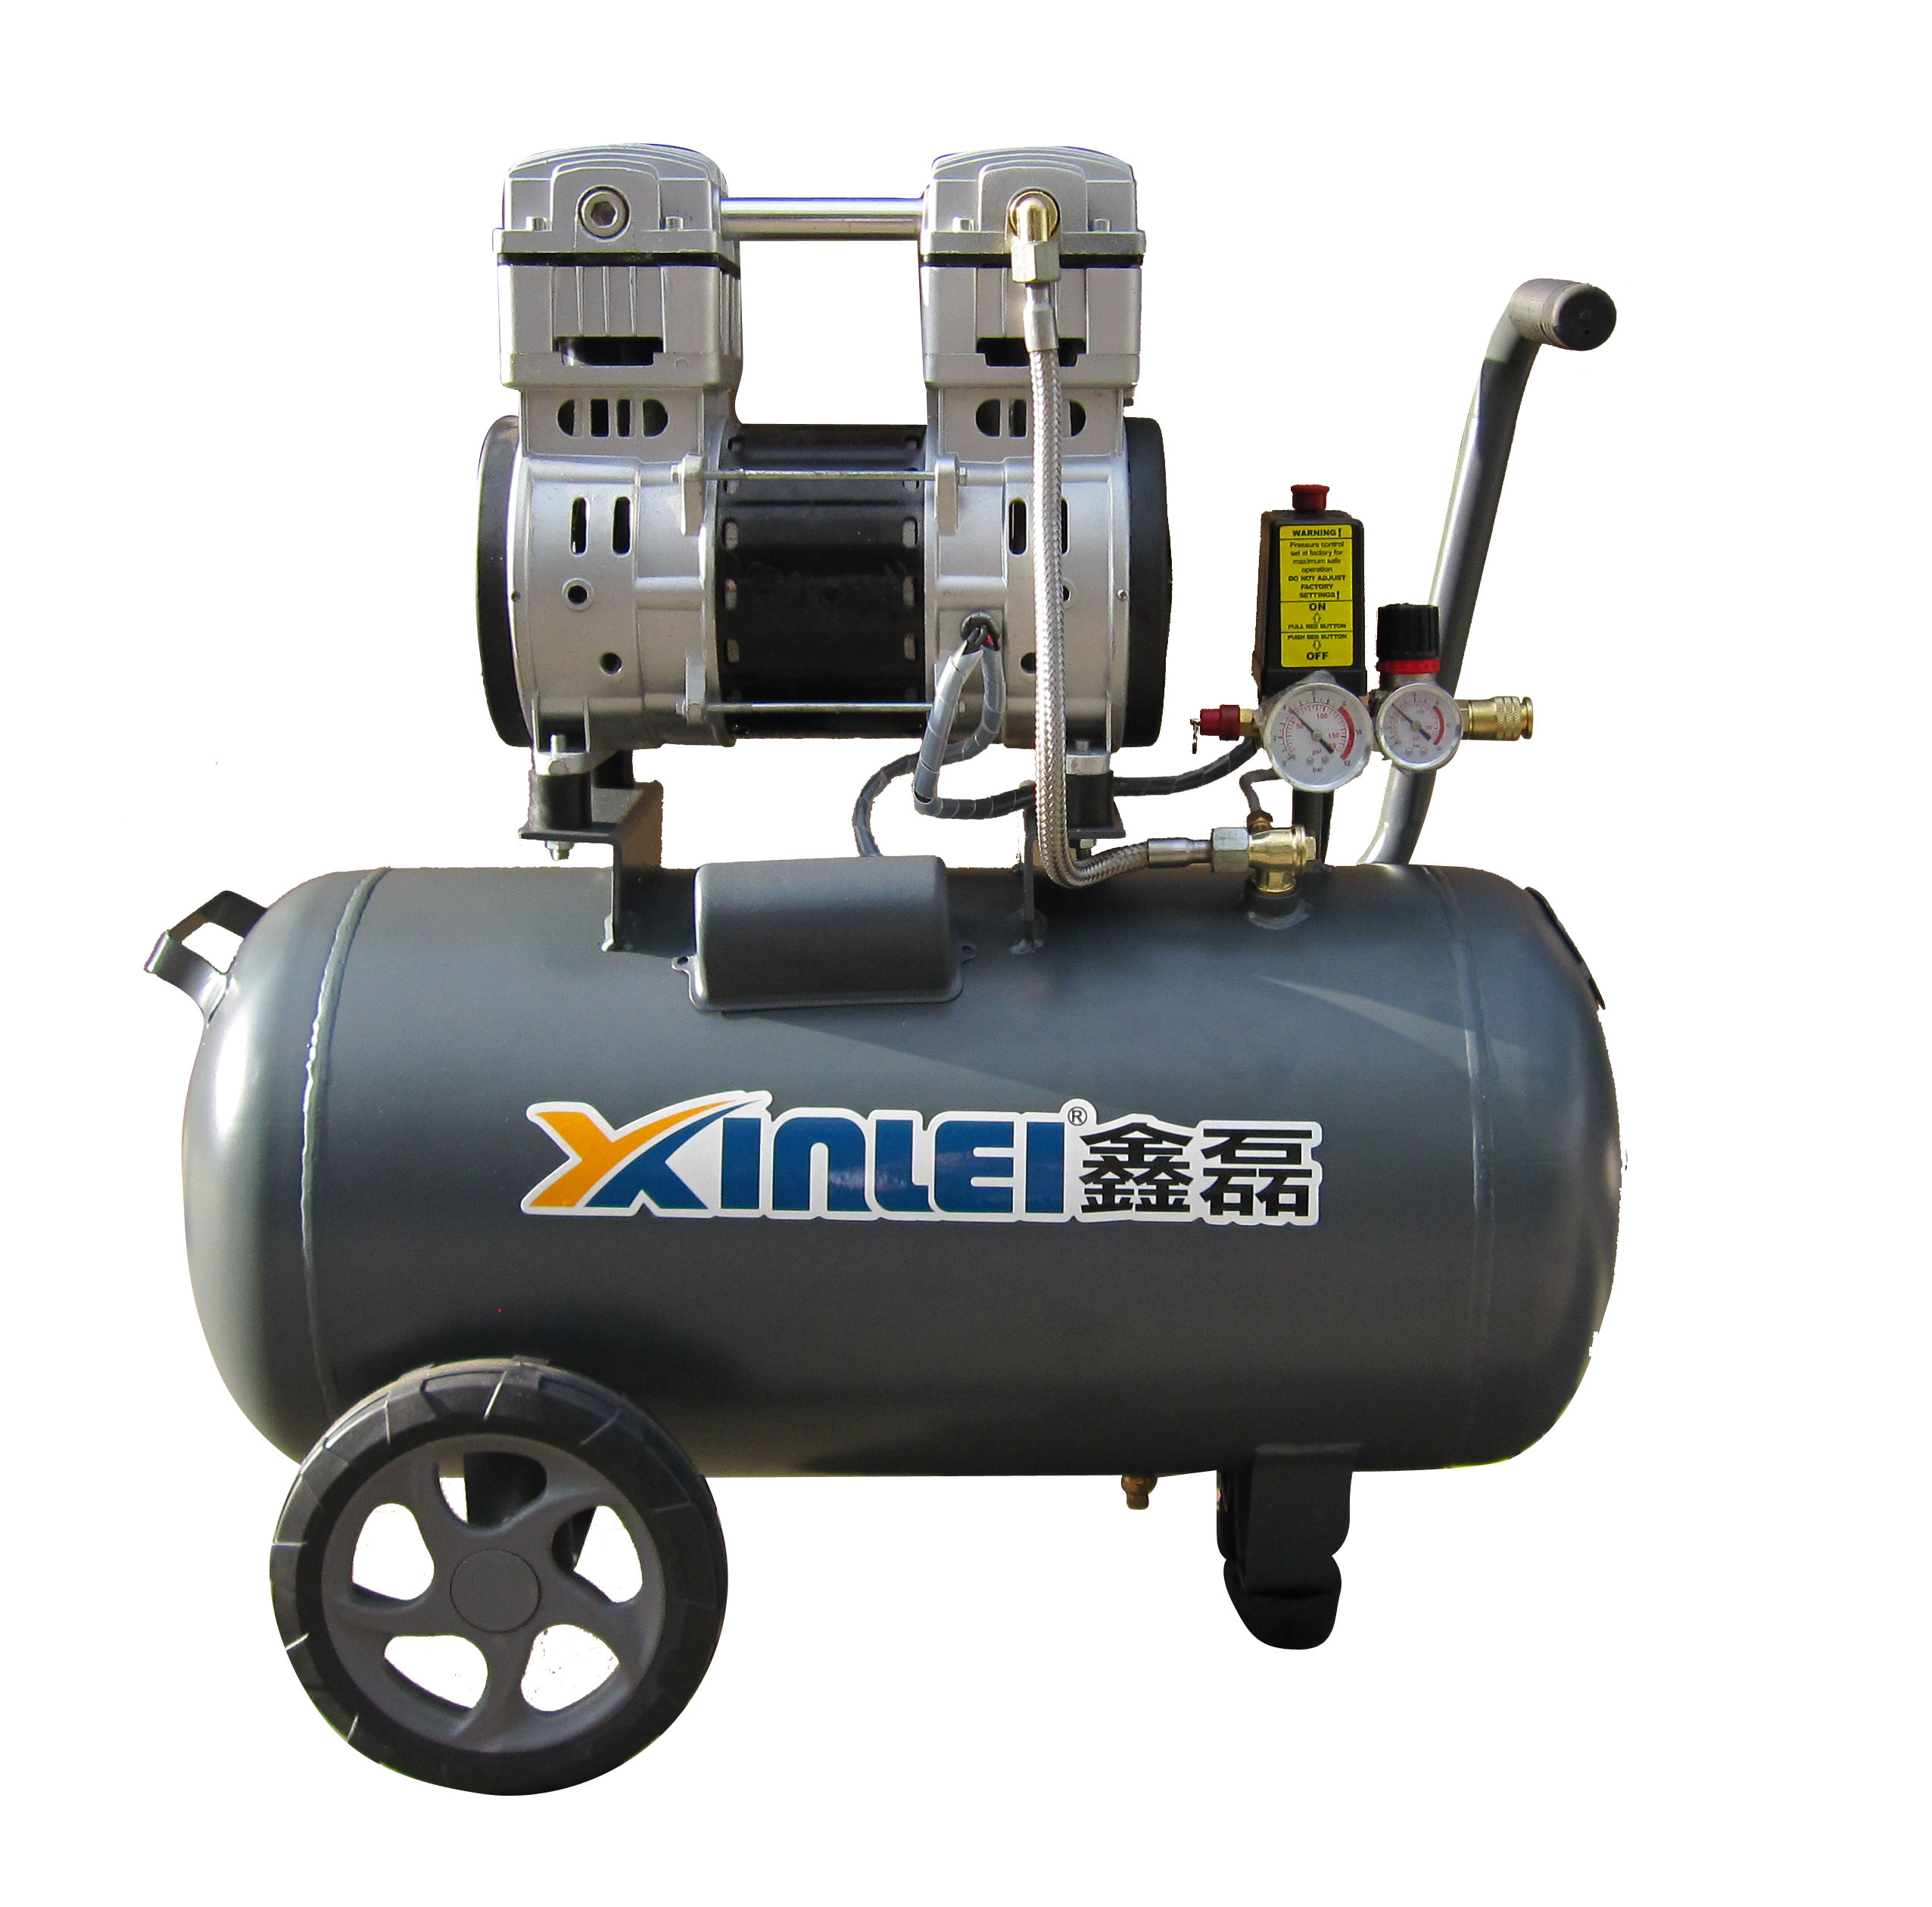 DIY xinlei silient oilfree piston air compressor ZBW64-50L 1100W T2